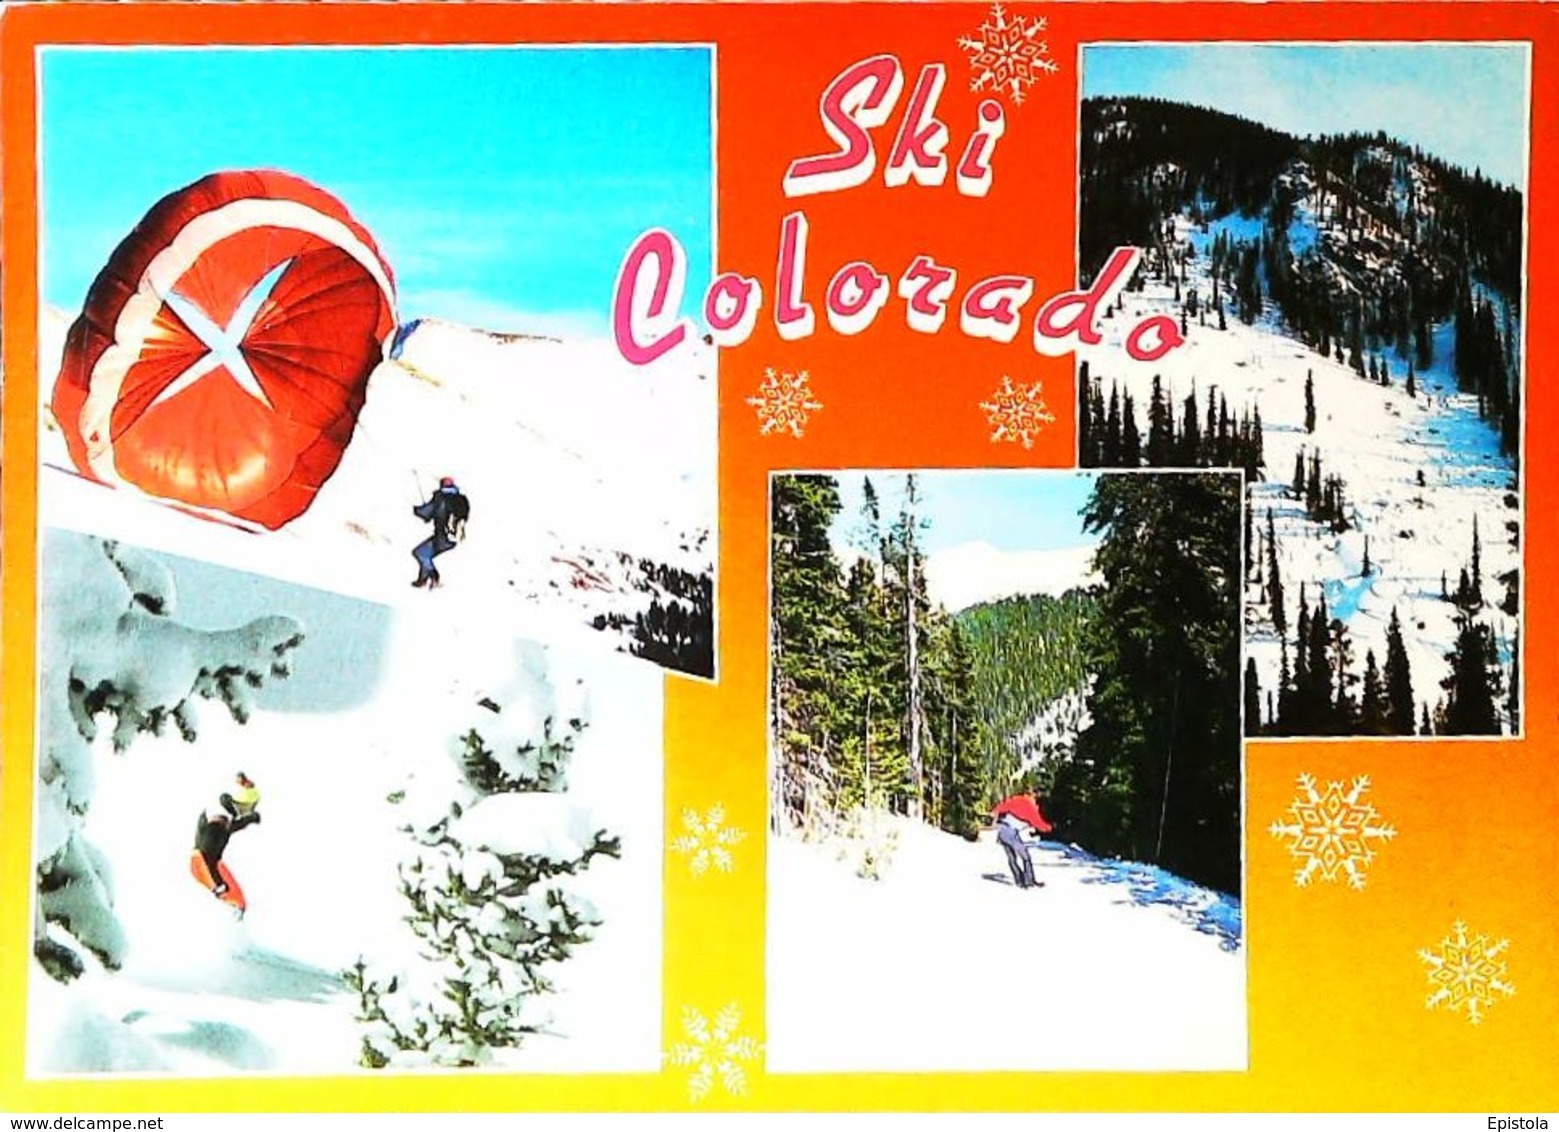 Parachutisme à Ski  "Ski Country & Parachuting" COLORADO -Edt Boulder Co. -  CPM 1980s - Parachutespringen